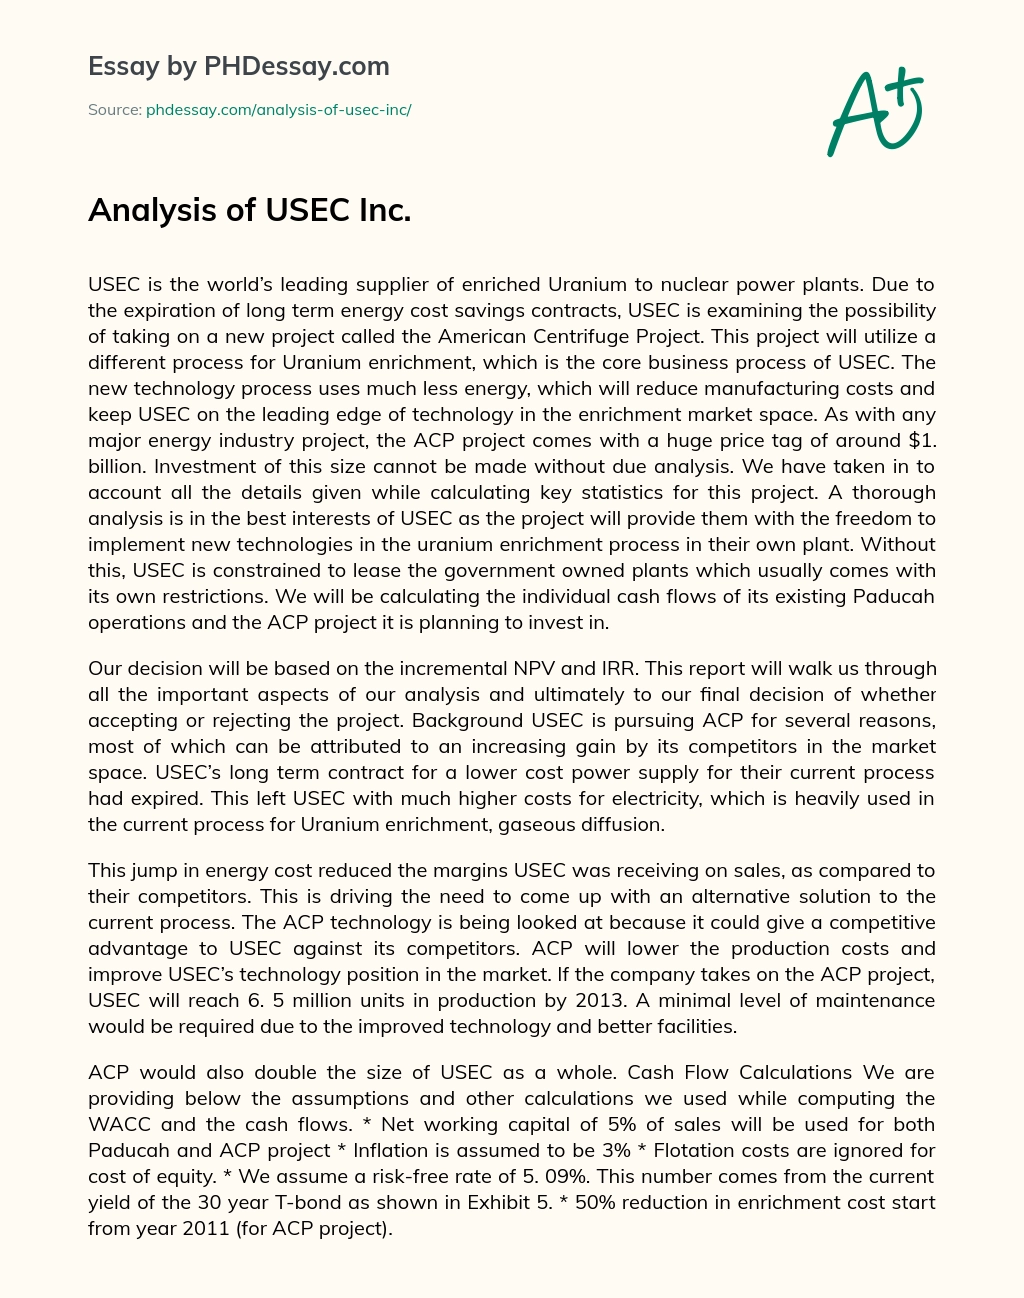 Analysis of USEC Inc. essay